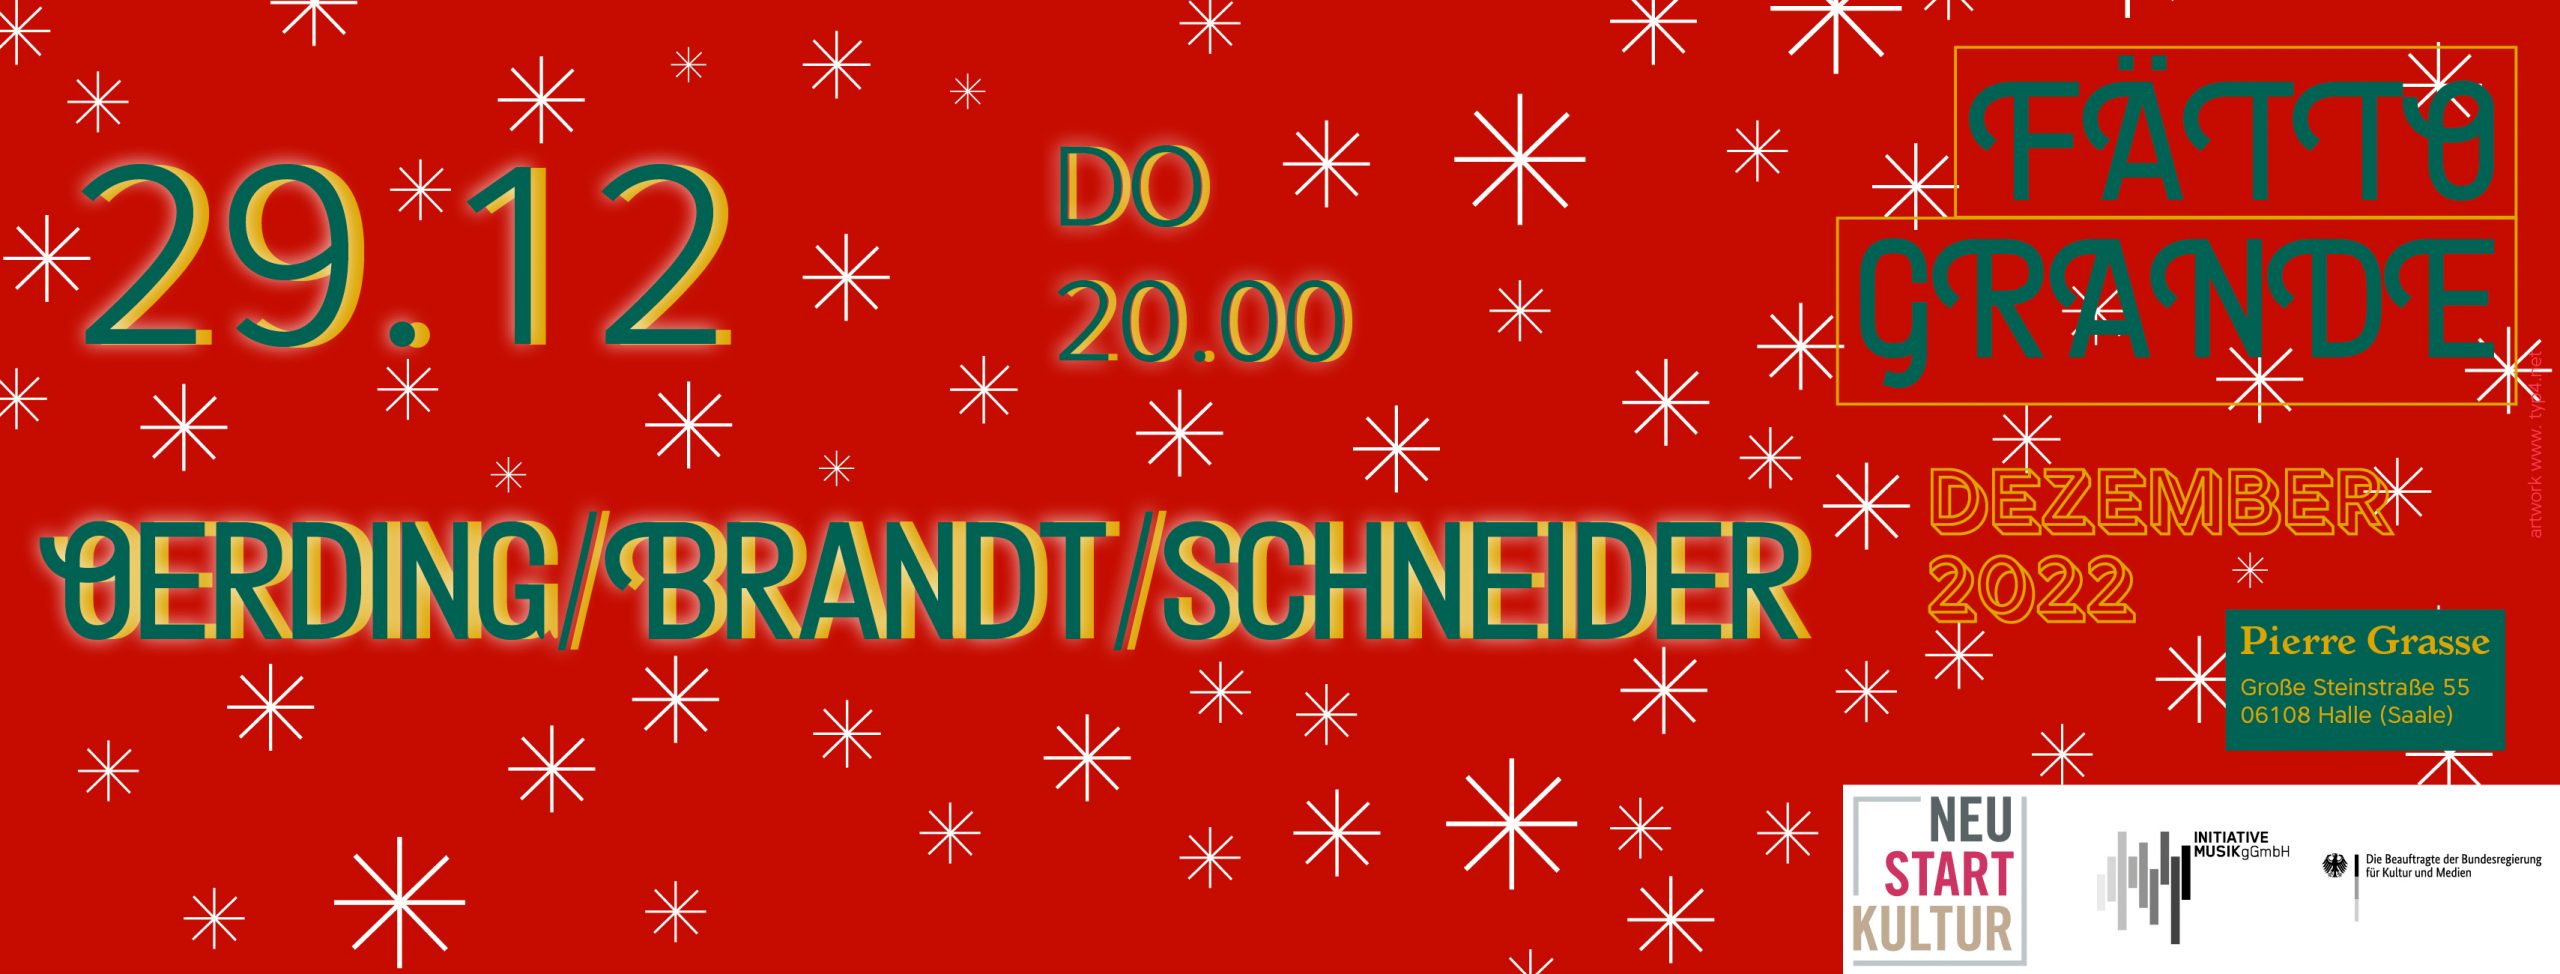 2022_11_Fätto Grande_Facebook Banner_Dezember20228